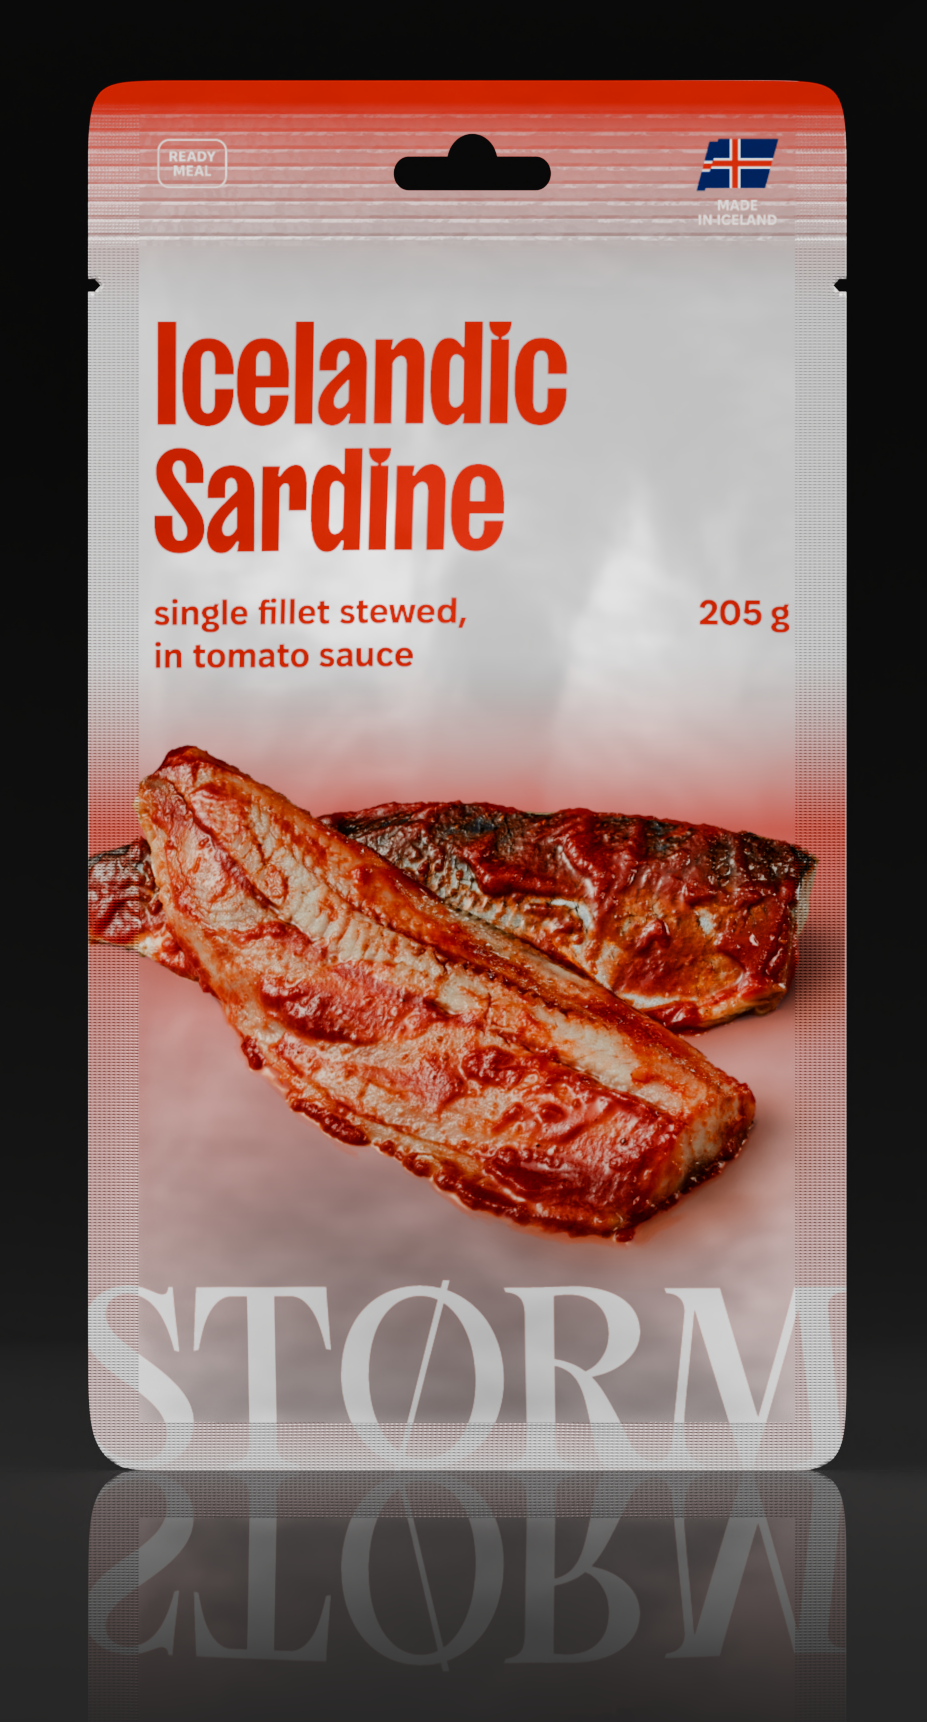 Icelandic Sardine single fillet stewed, in tomato sauce